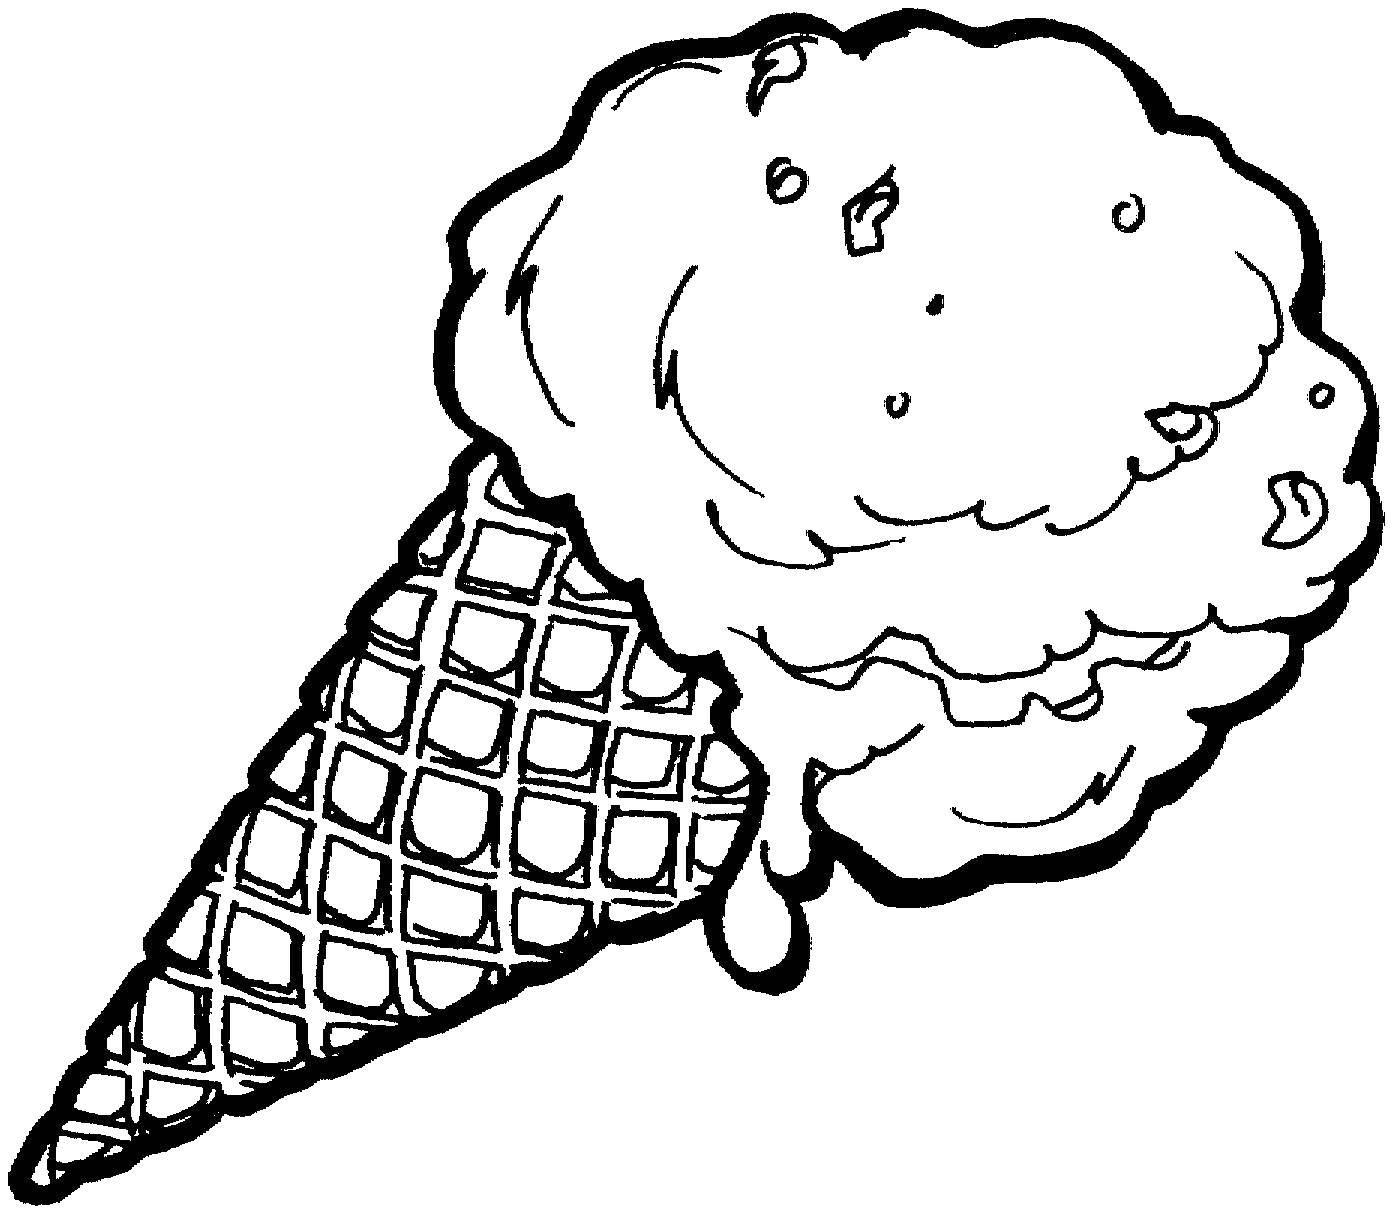 Coloring Melting ice cream. Category ice cream. Tags:  Ice cream, sweetness, children.